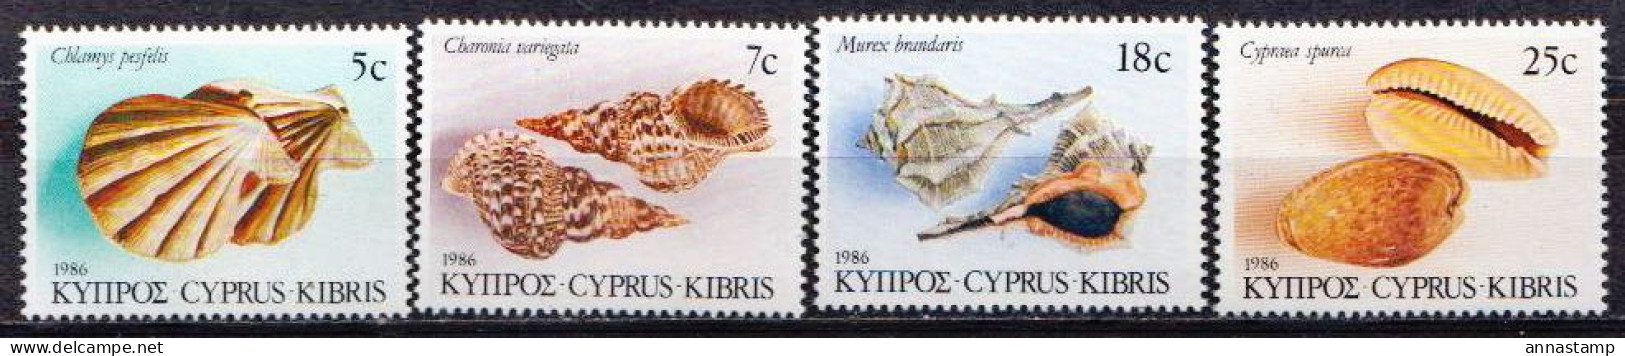 Cyprus MNH Set - Conchiglie